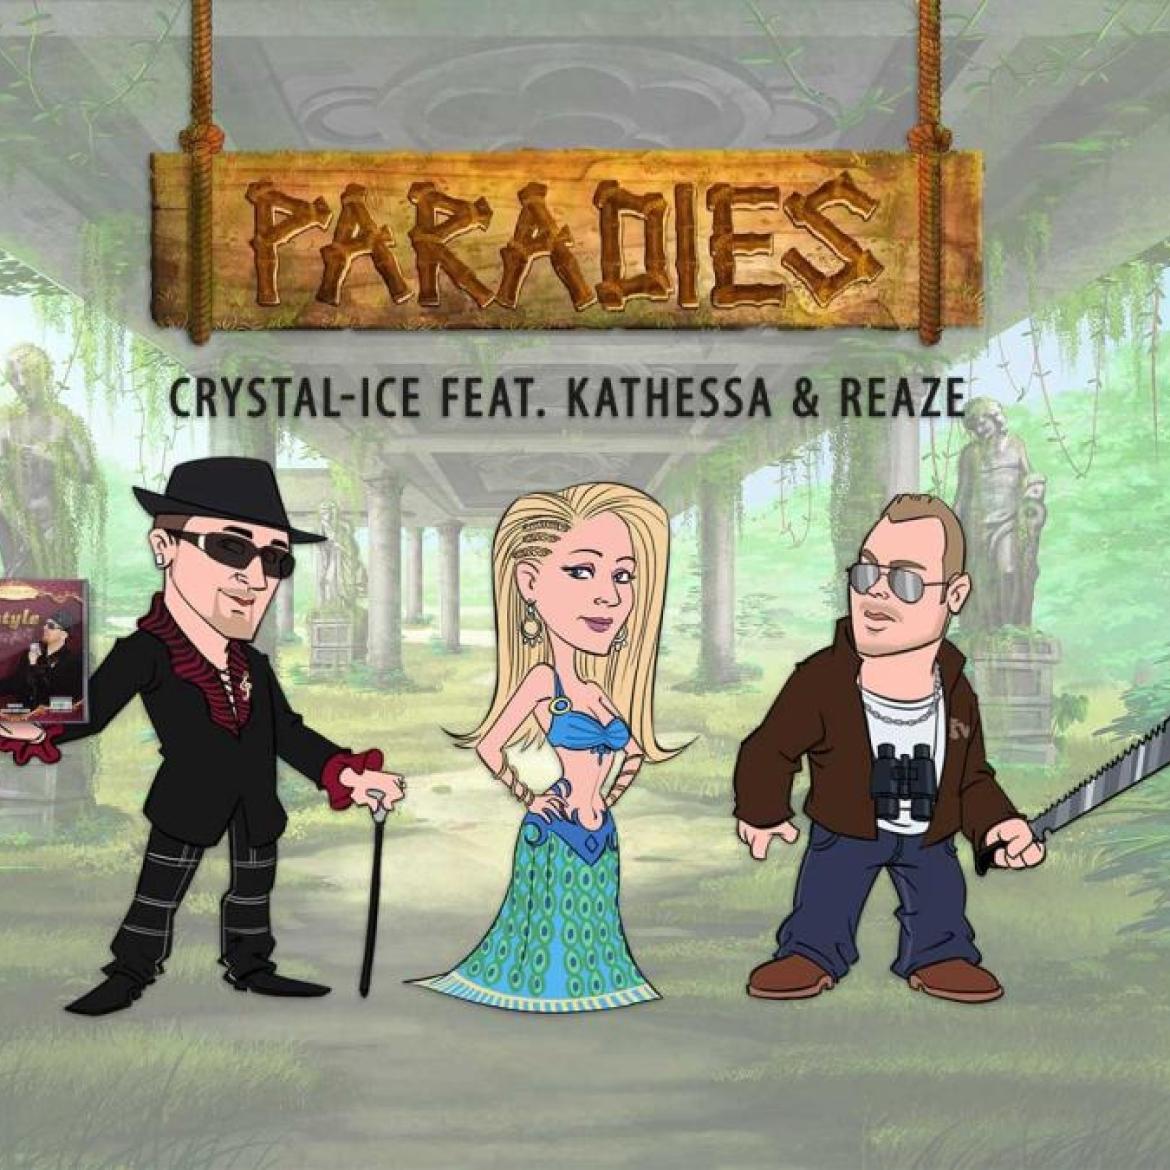 Crystal-Ice feat. Kathessa & Reaze - Paradies